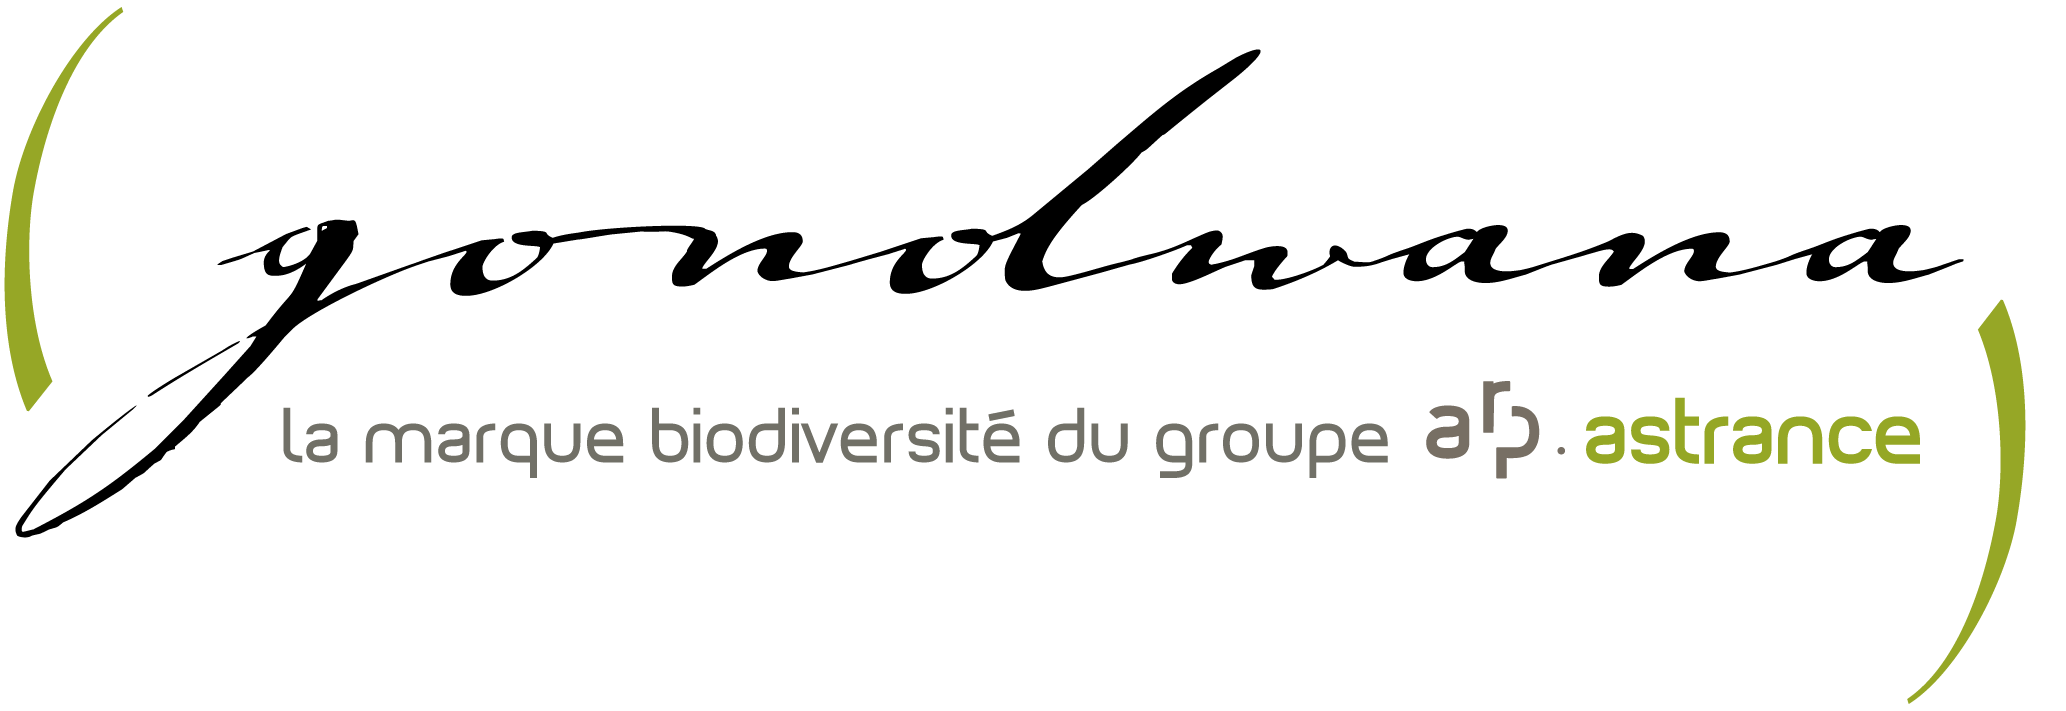 logo gondwana developpement durable